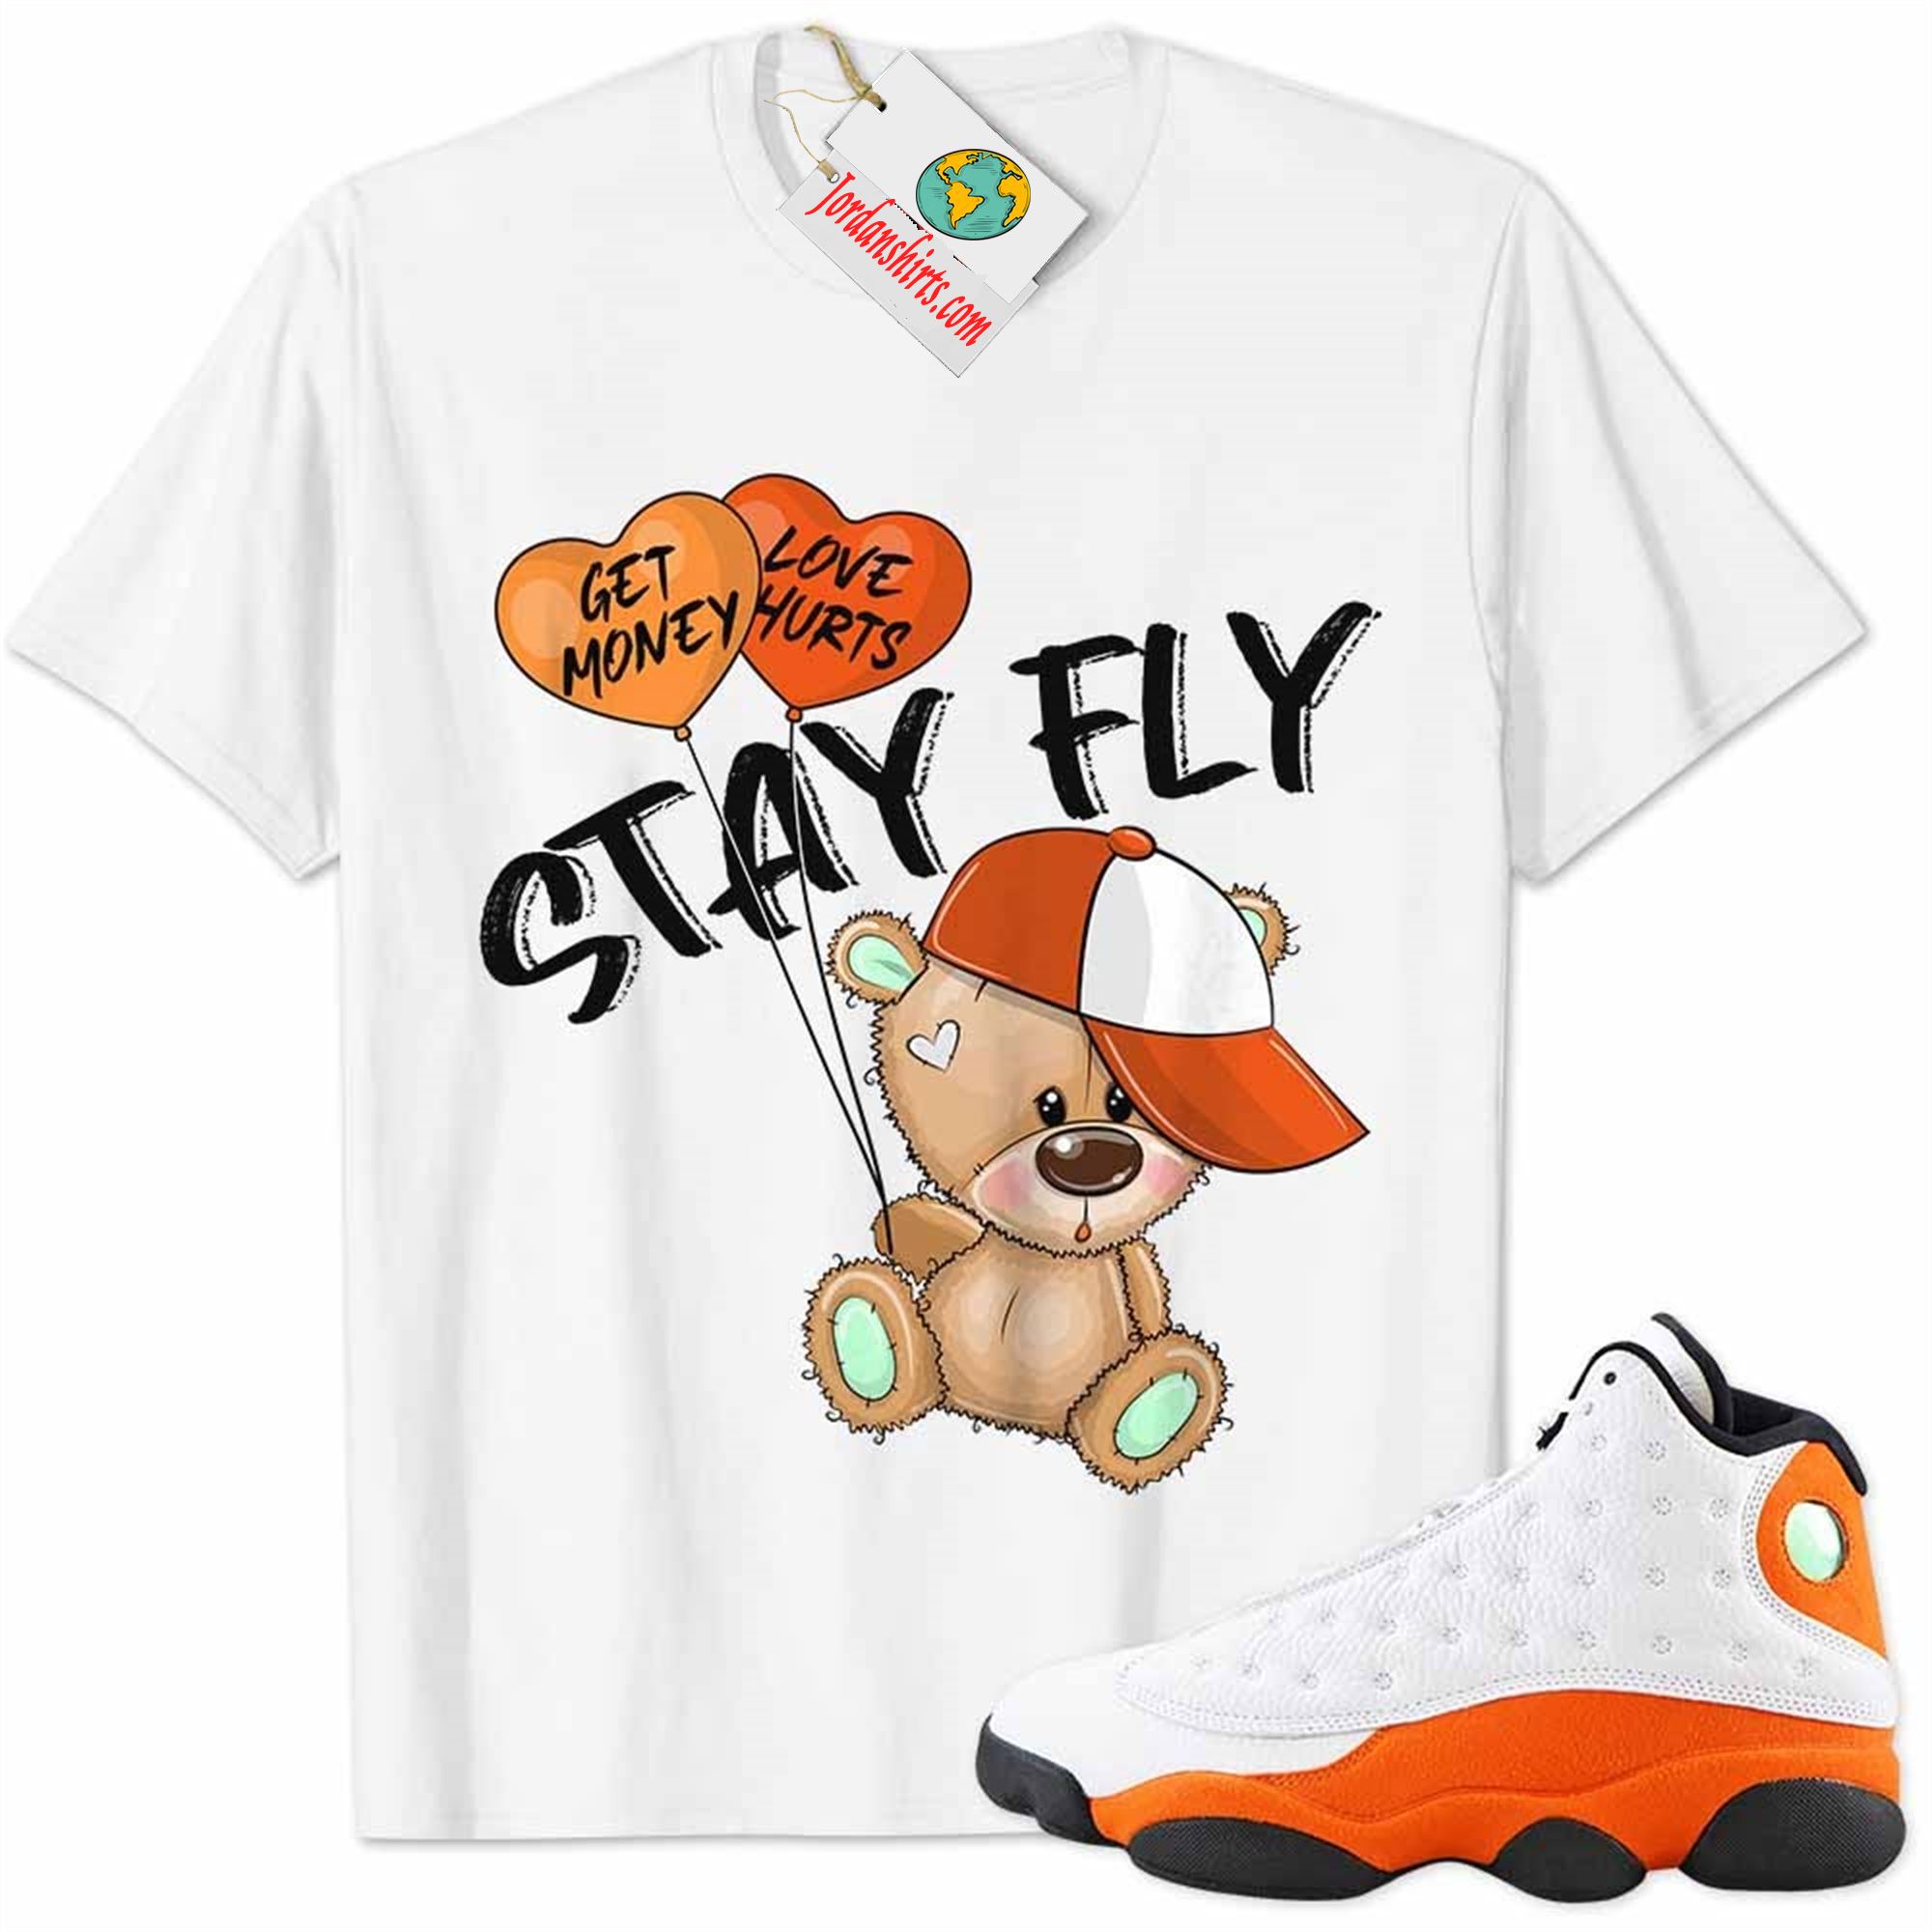 Jordan 13 Shirt, Starfish 13s Shirt Cute Teddy Bear Stay Fly Get Money White Size Up To 5xl